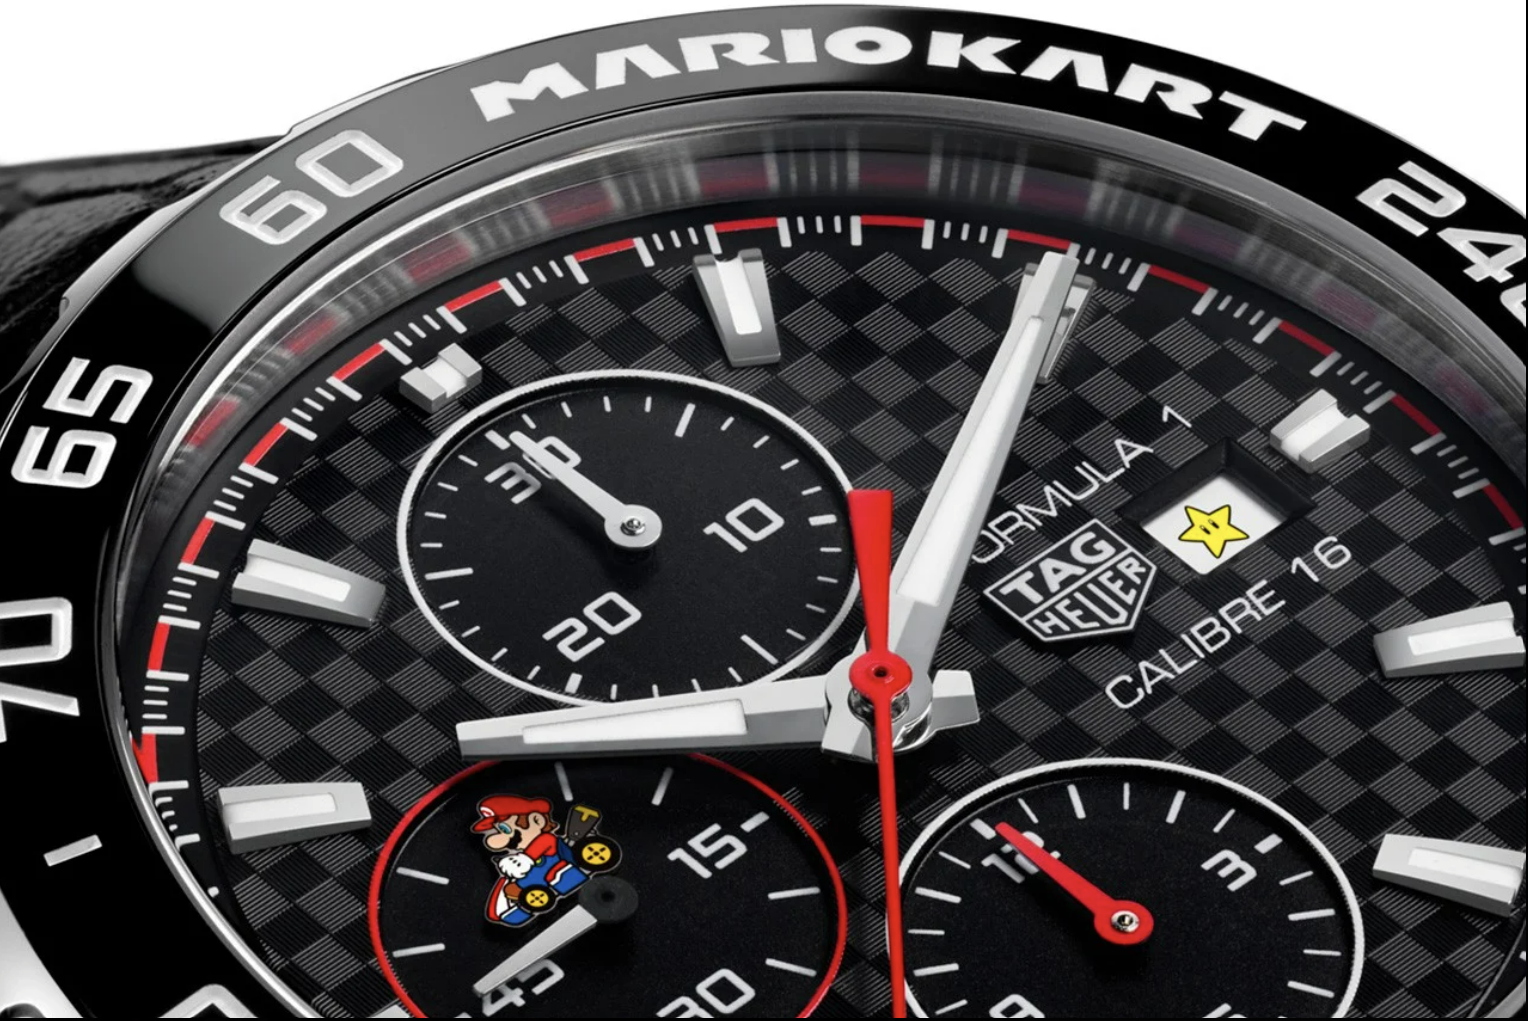 Tag Heuer Mario Kart Watch 2 | Mario Kart | สวยงามราคาแพง นาฬิกา Tag Heuer ที่ใช้ลวดลายธีมจาก Mario Kart ราคาเกือบล้าน!